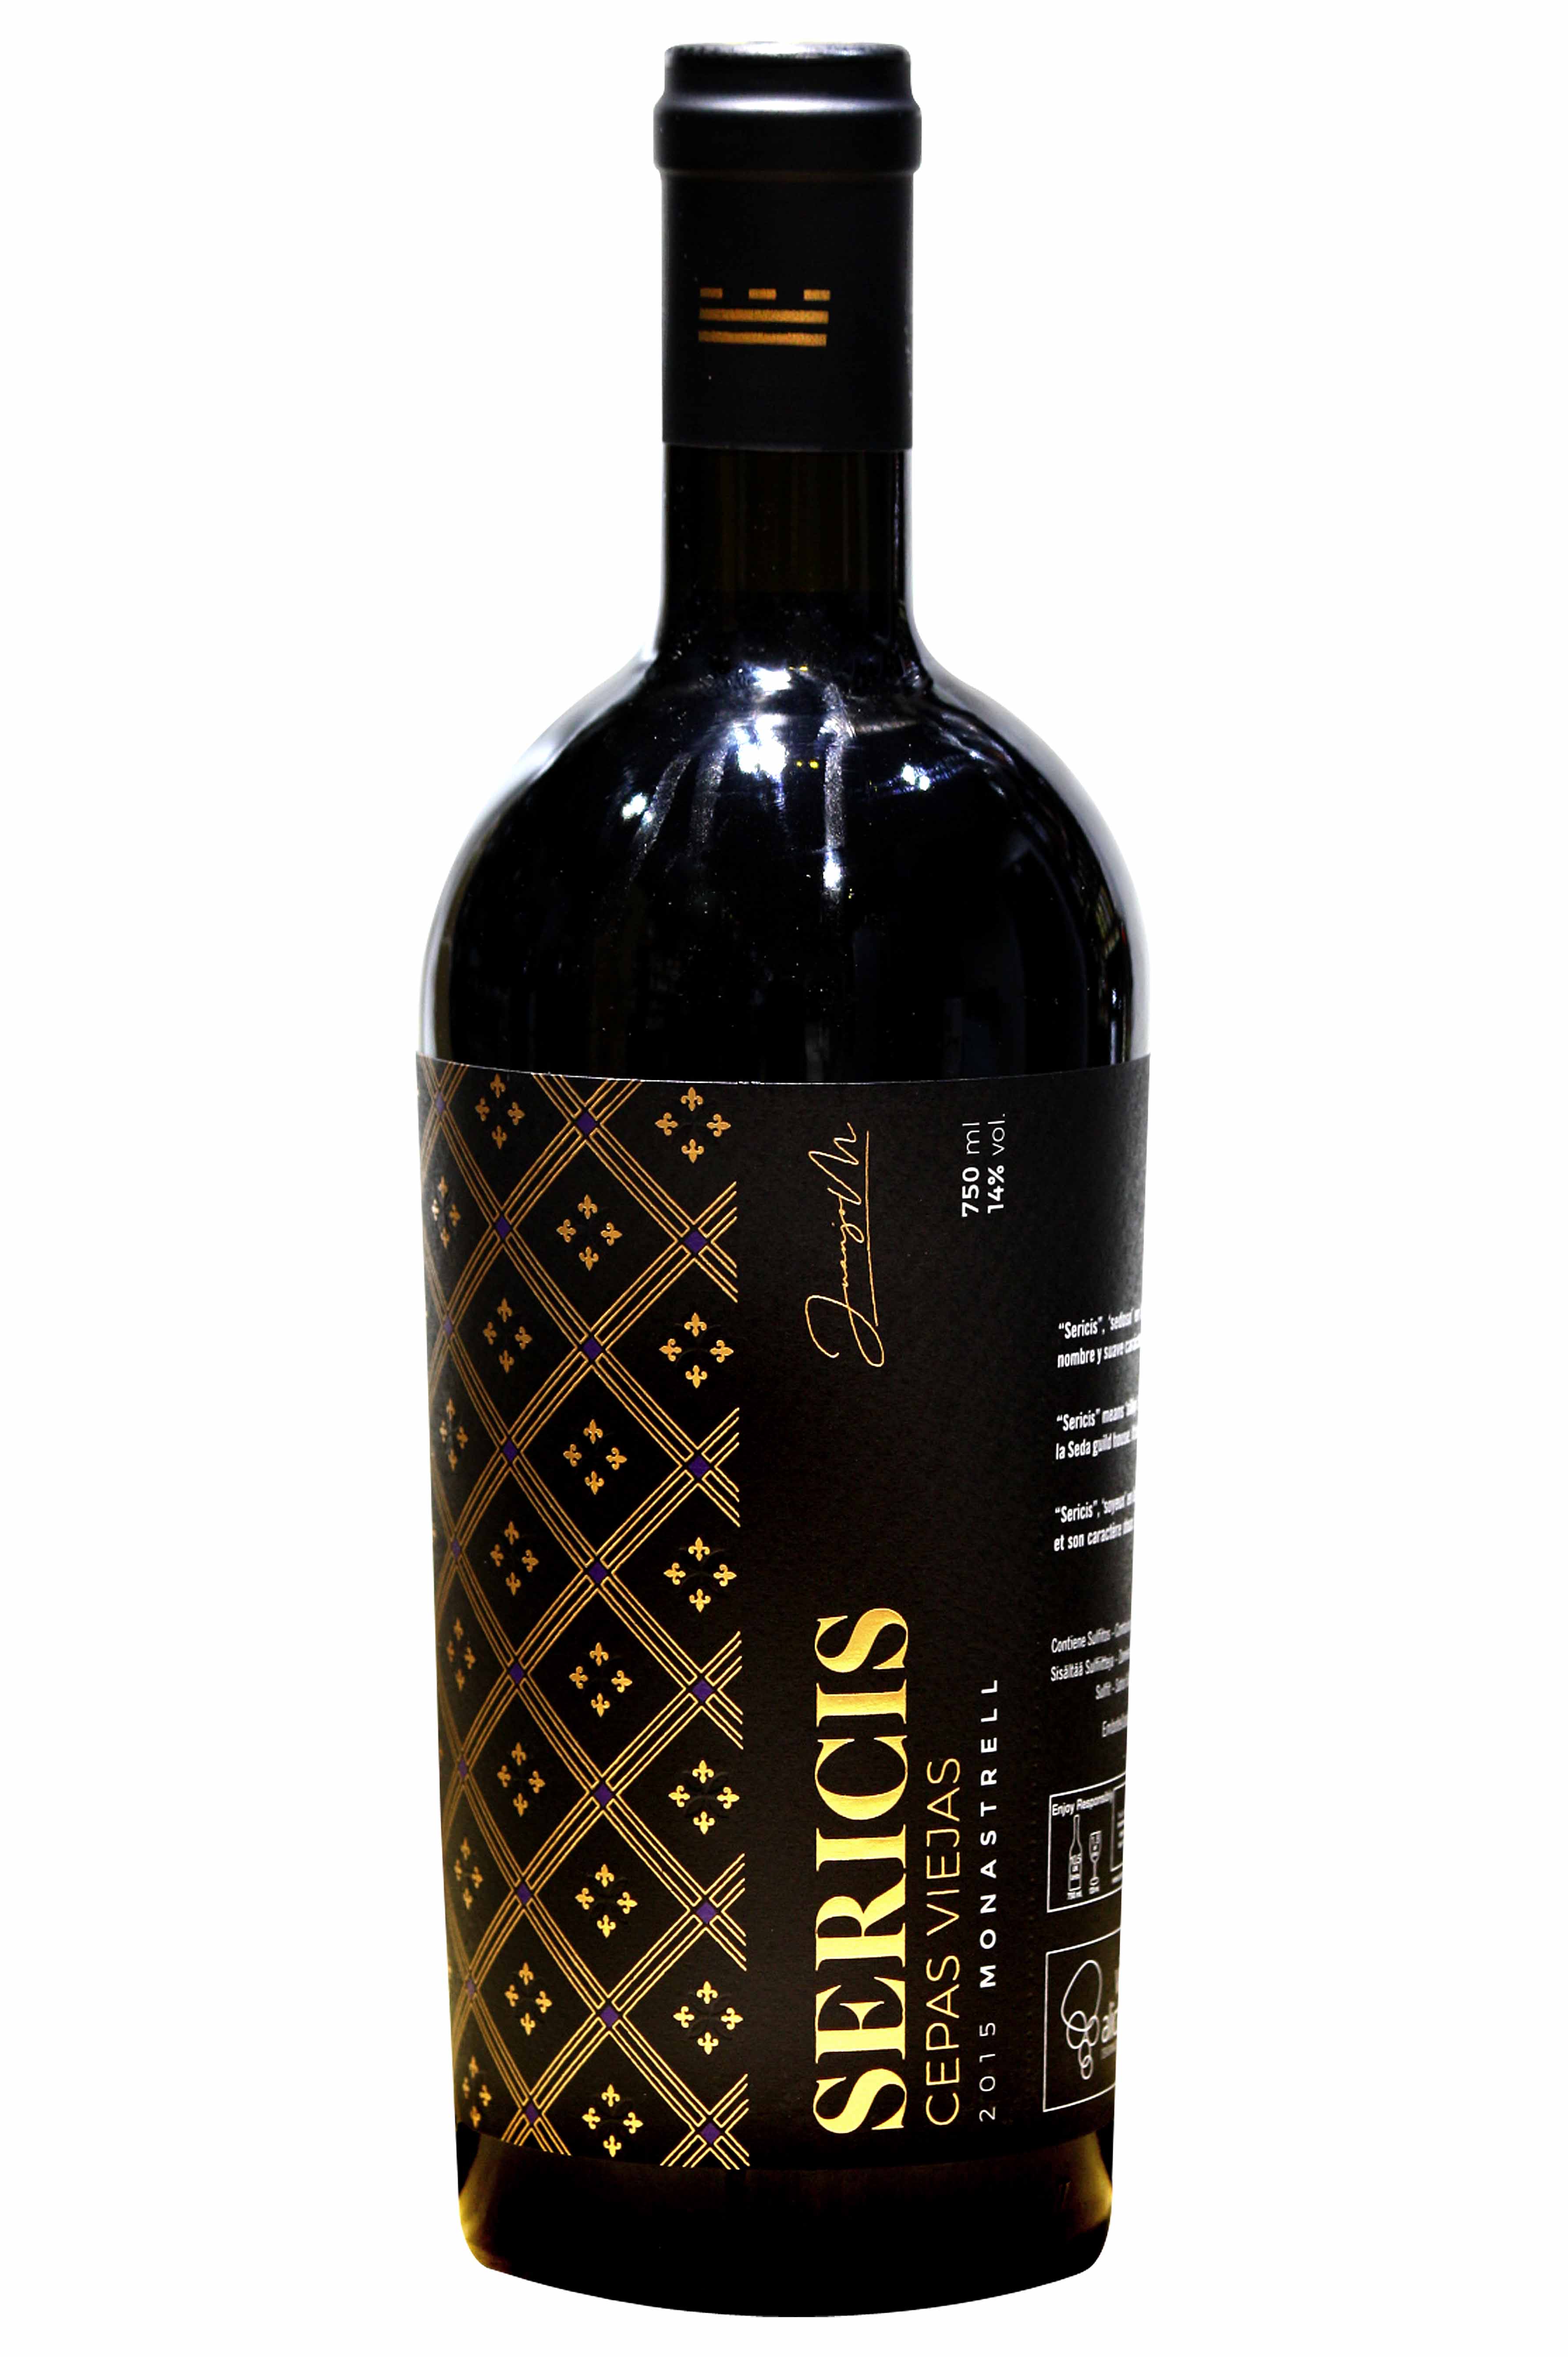 Sericis monastrell red wine